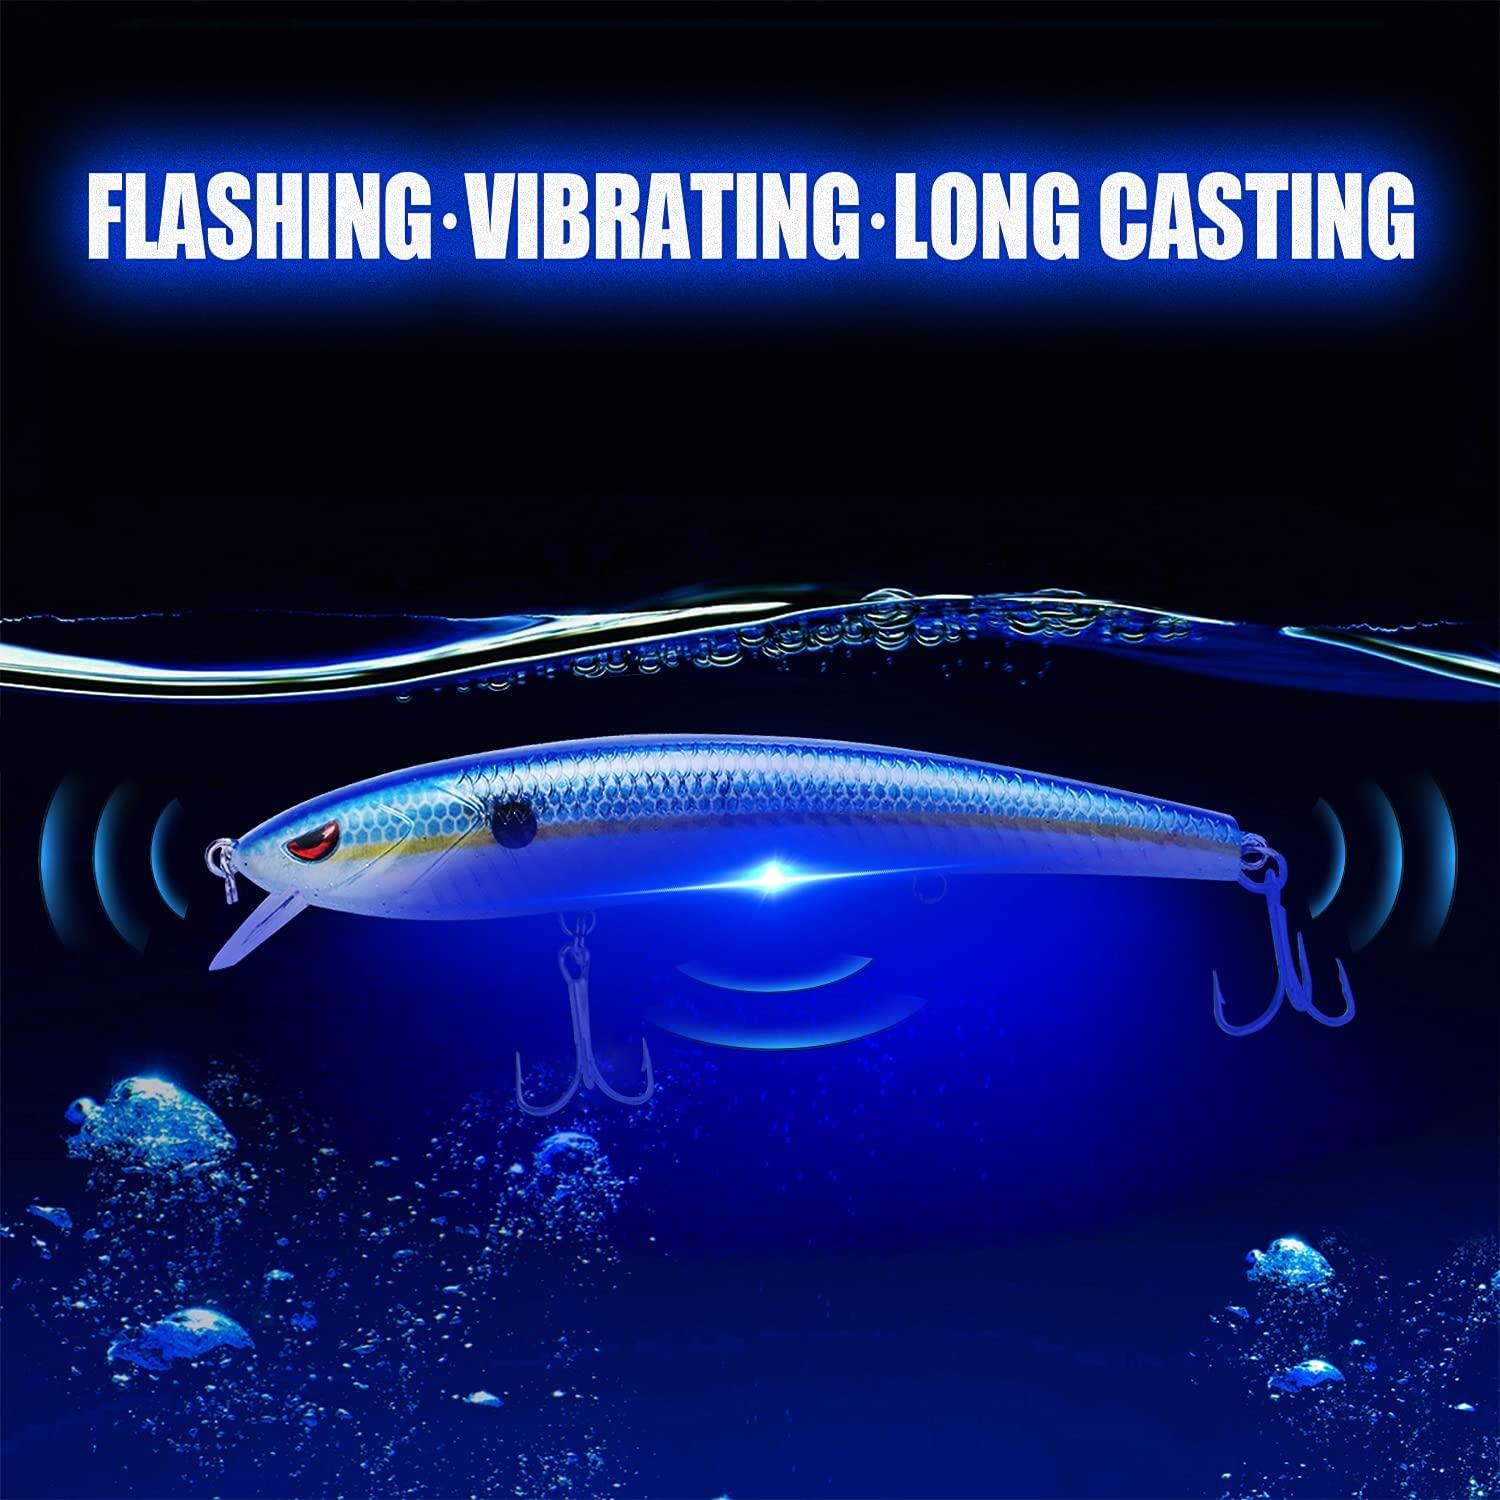 Robotic Vibrating Lure 5 - Catch More Fish